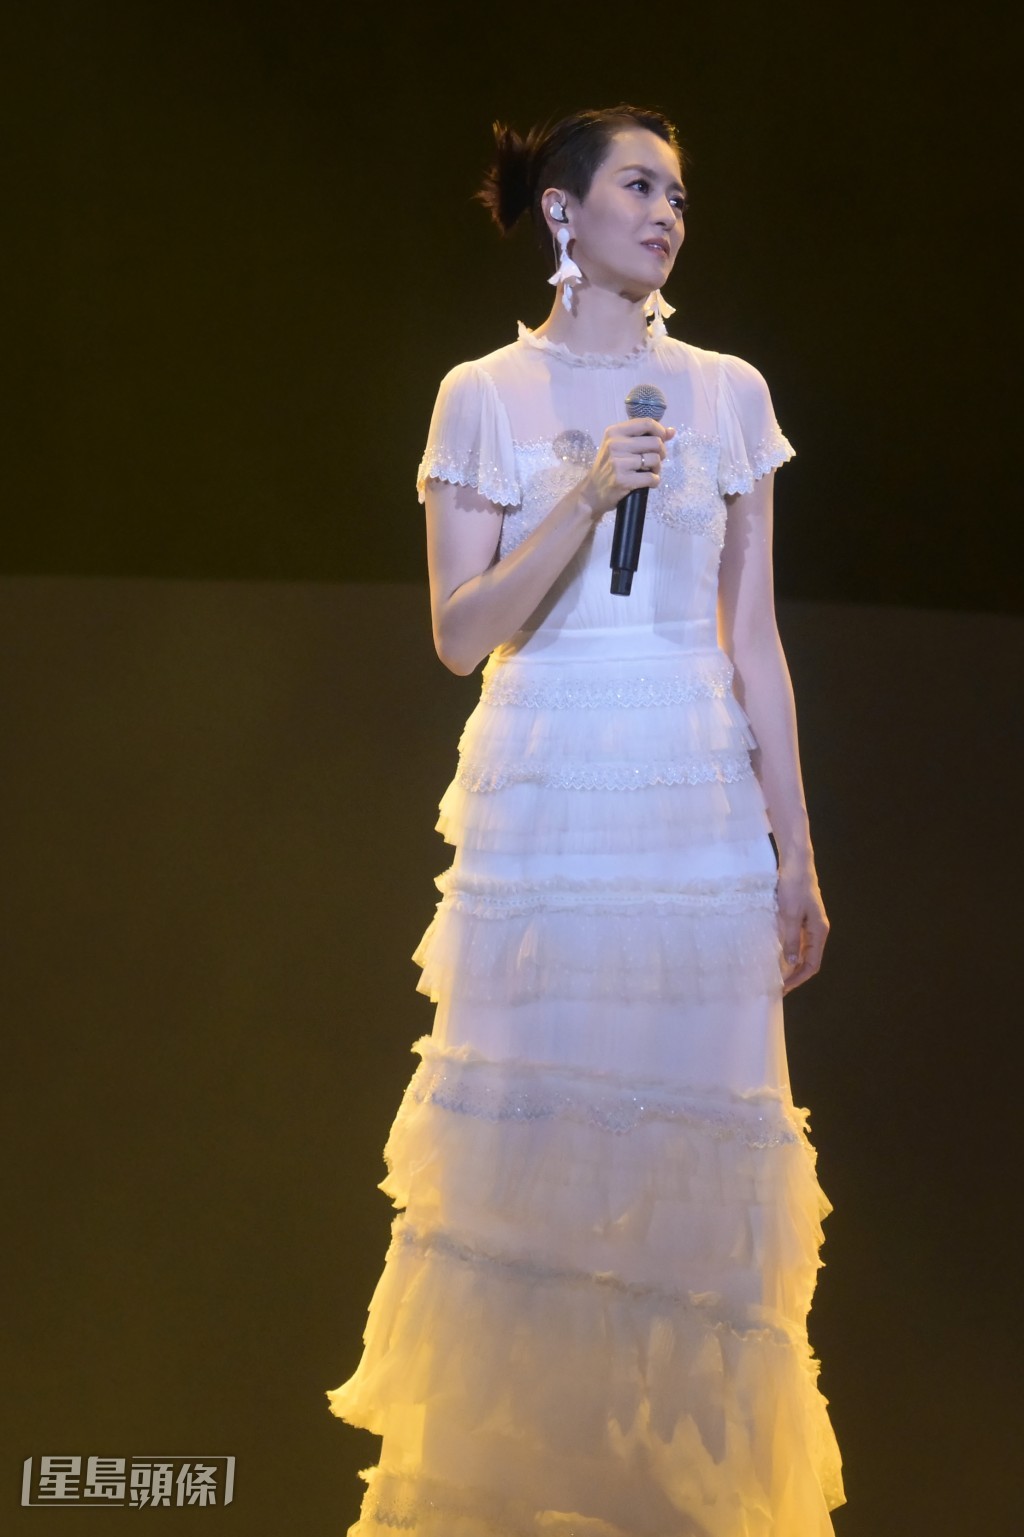 Gigi為歌迷設計台北場獨一無二的專屬「全國語」歌單。